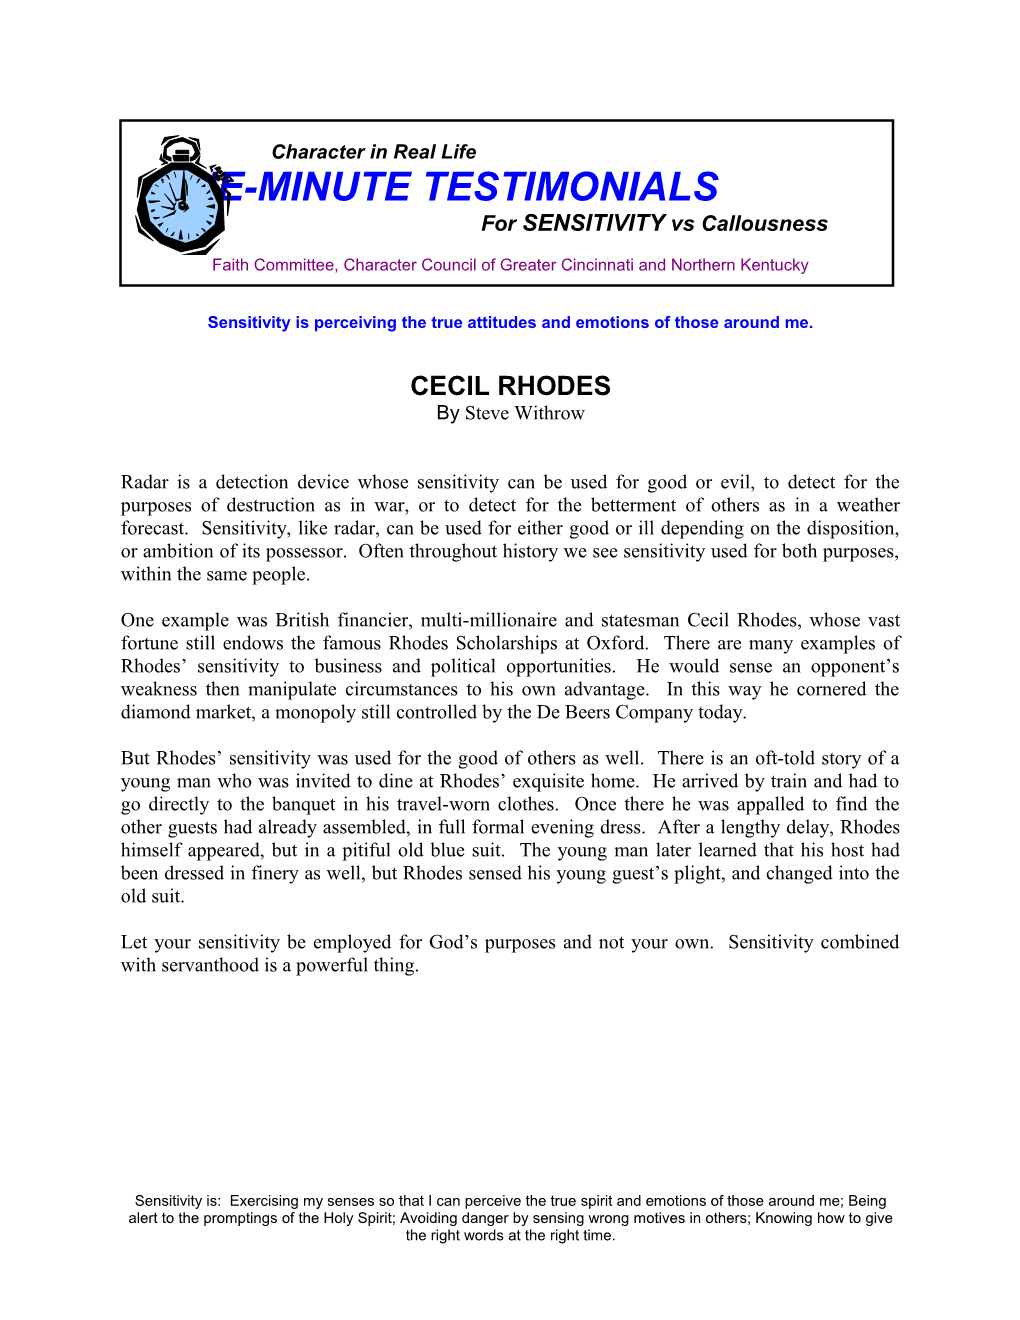 One-Minute Testimonials